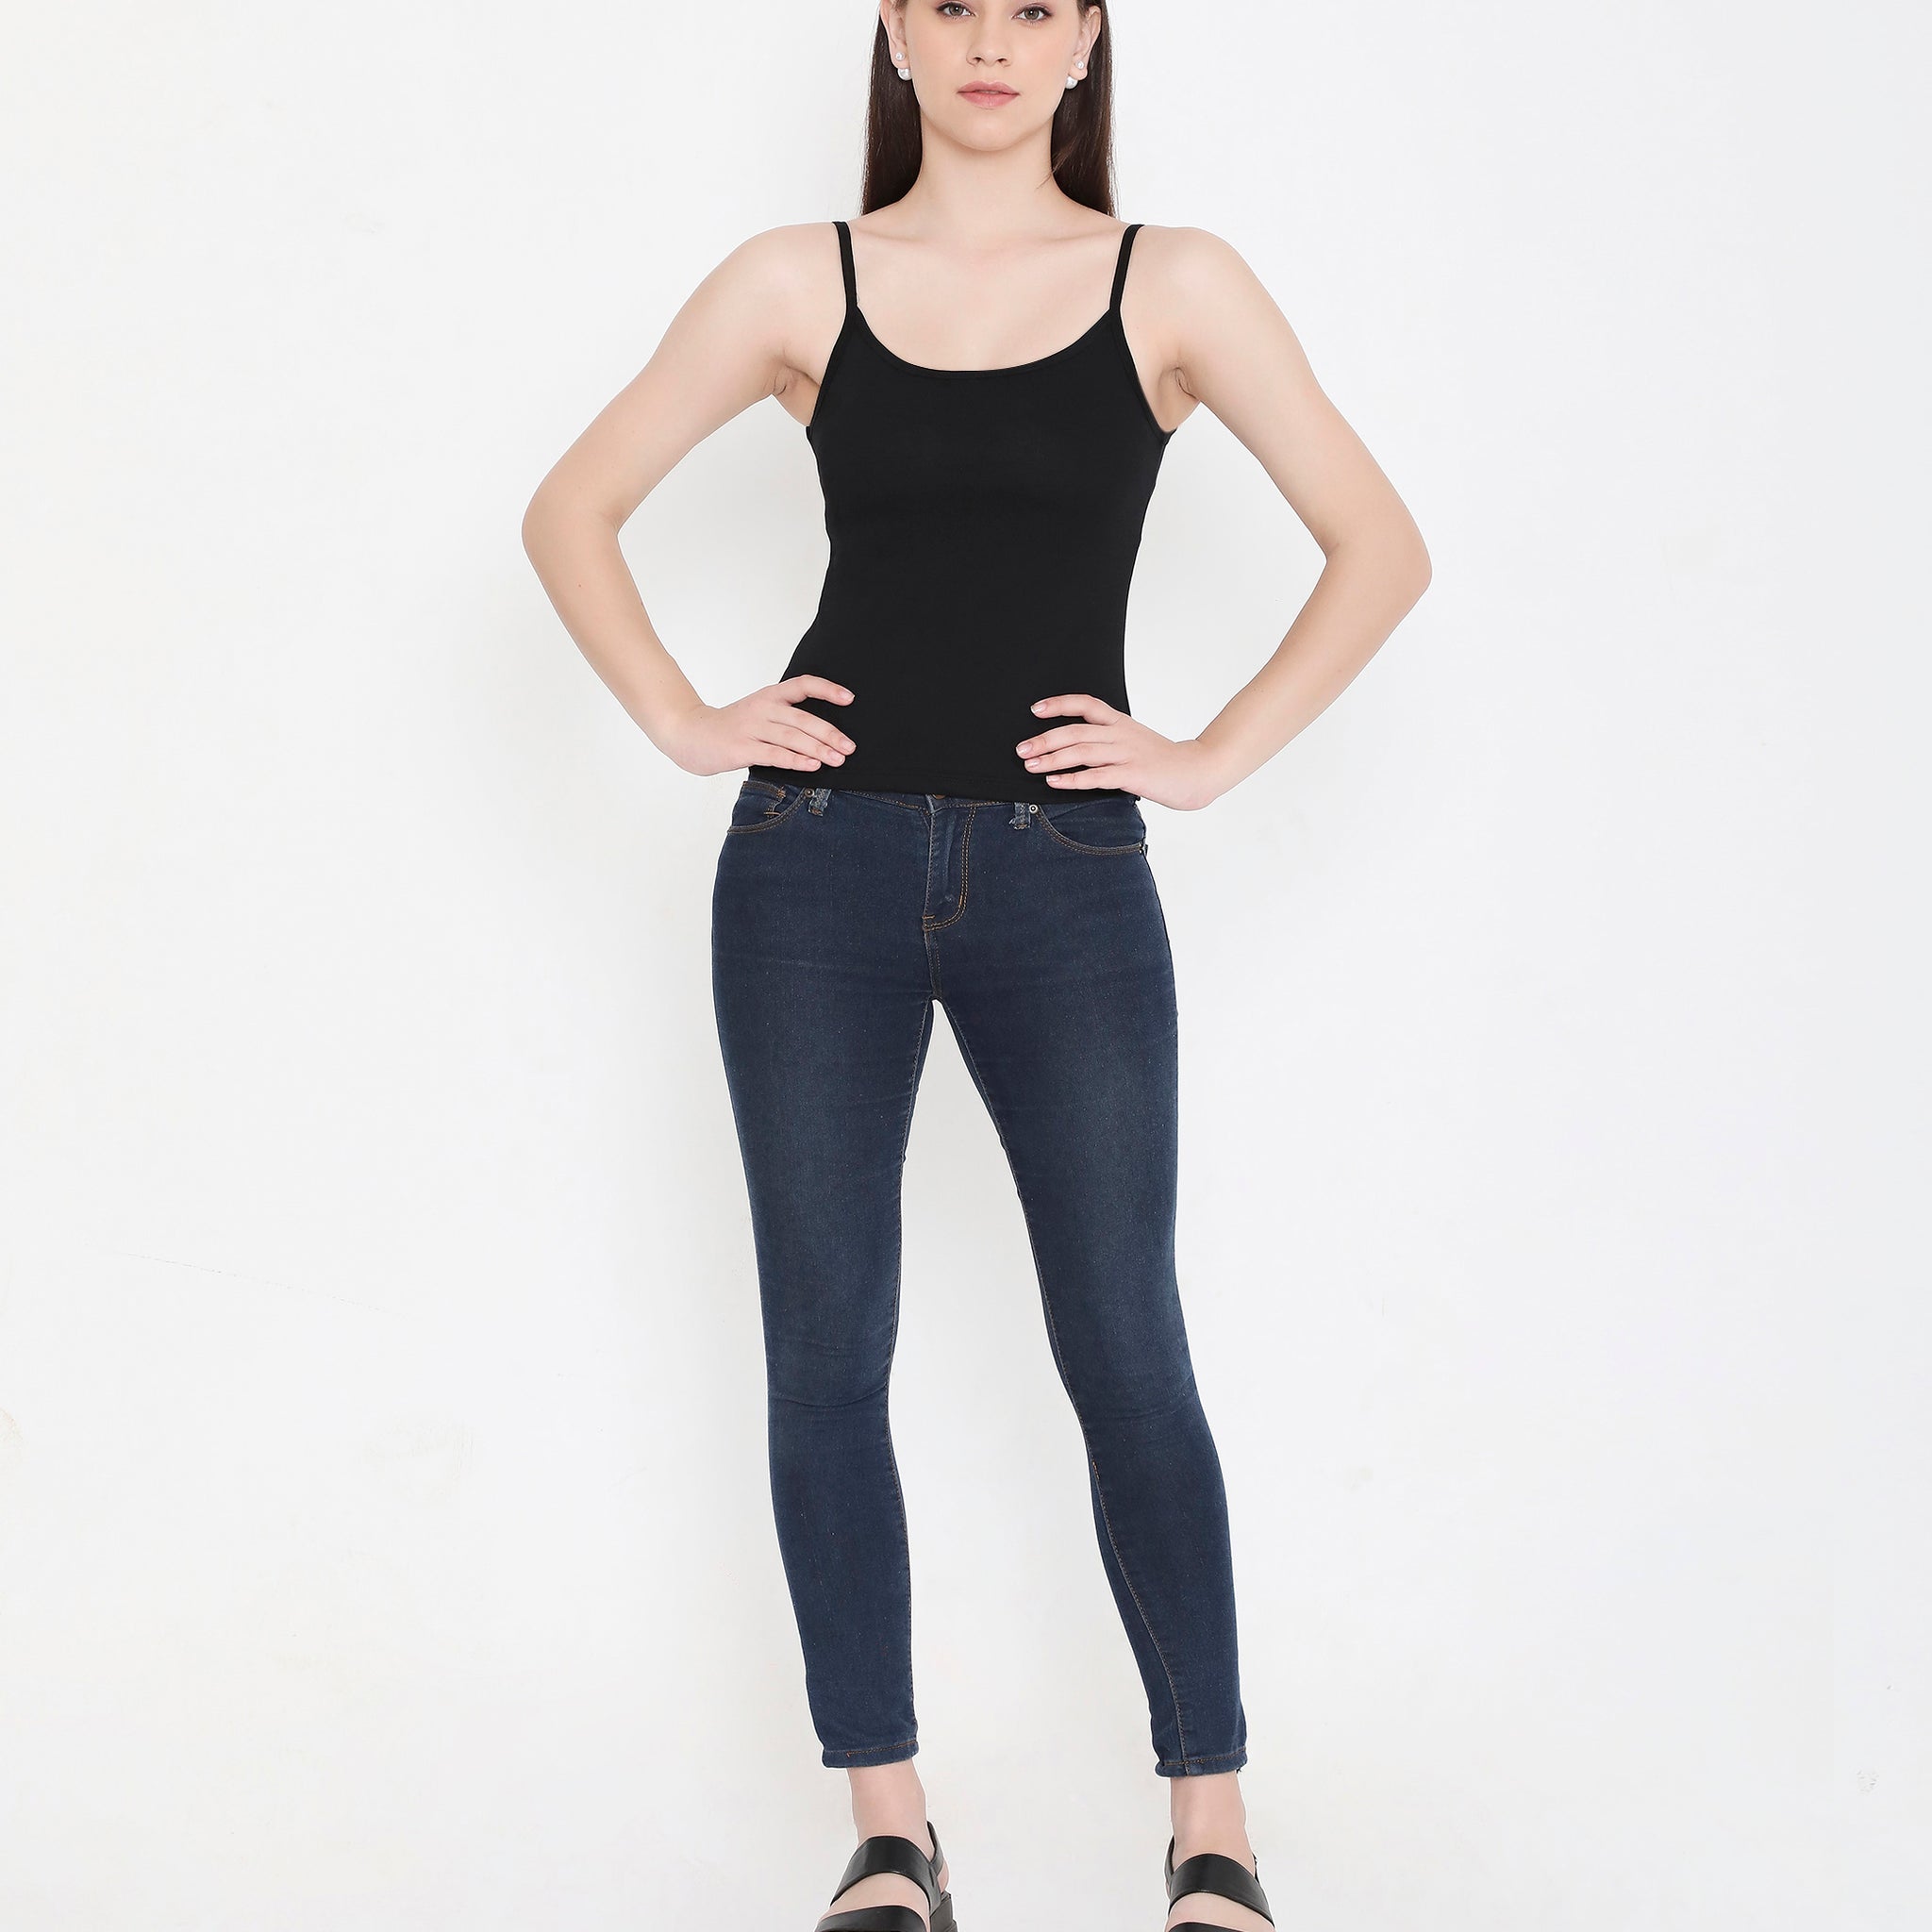 Women Solid Black Pure Cotton Innerwear Camisole with Slender Straps